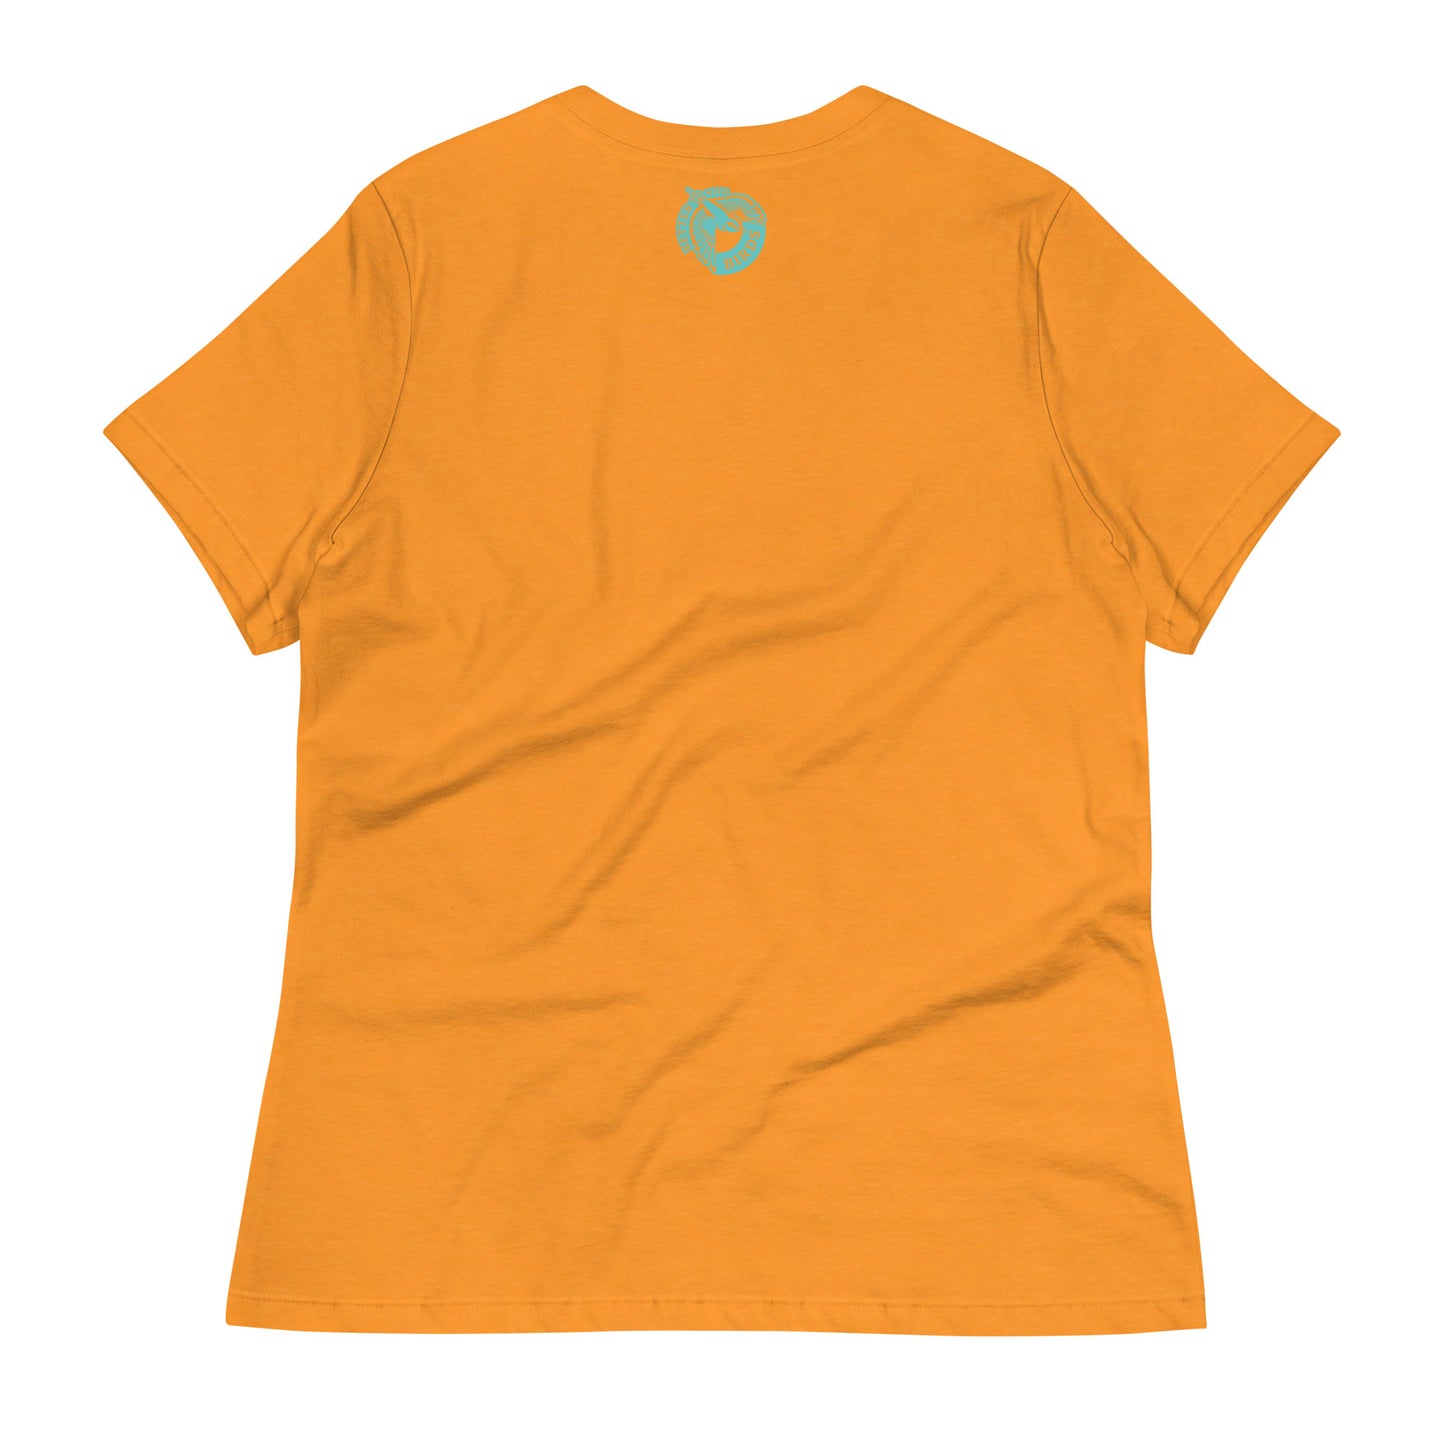 Chestnut-Sided Warbler Women's Relaxed T-Shirt